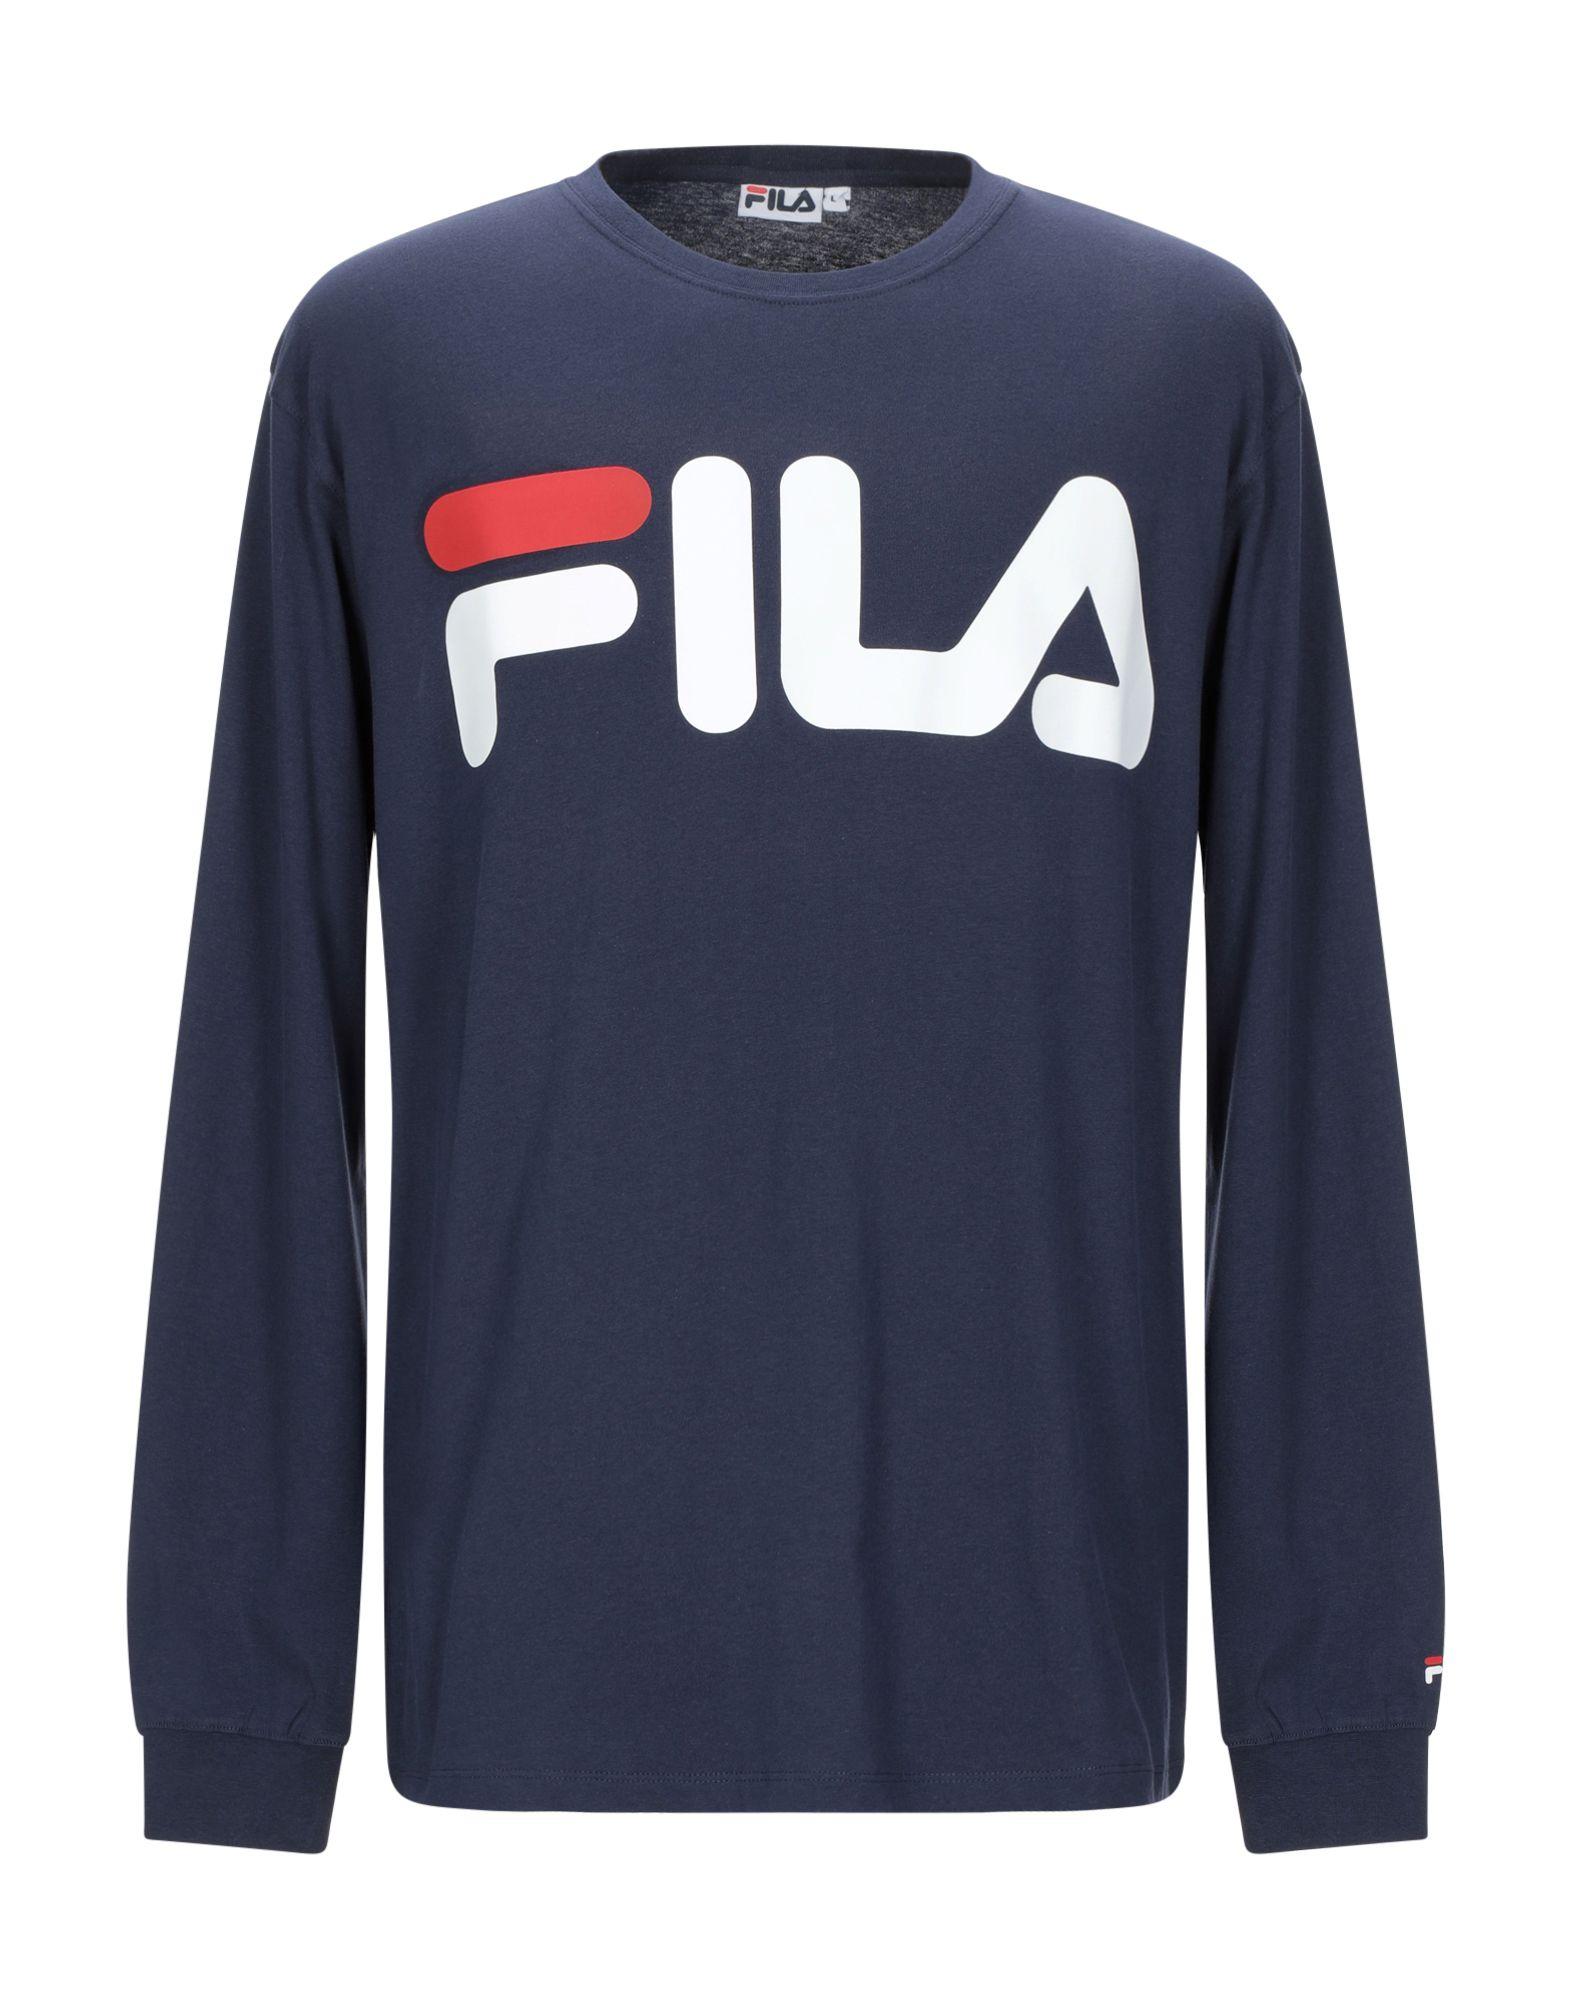 Fila Cotton T-shirt in Dark Blue (Blue) for Men - Lyst